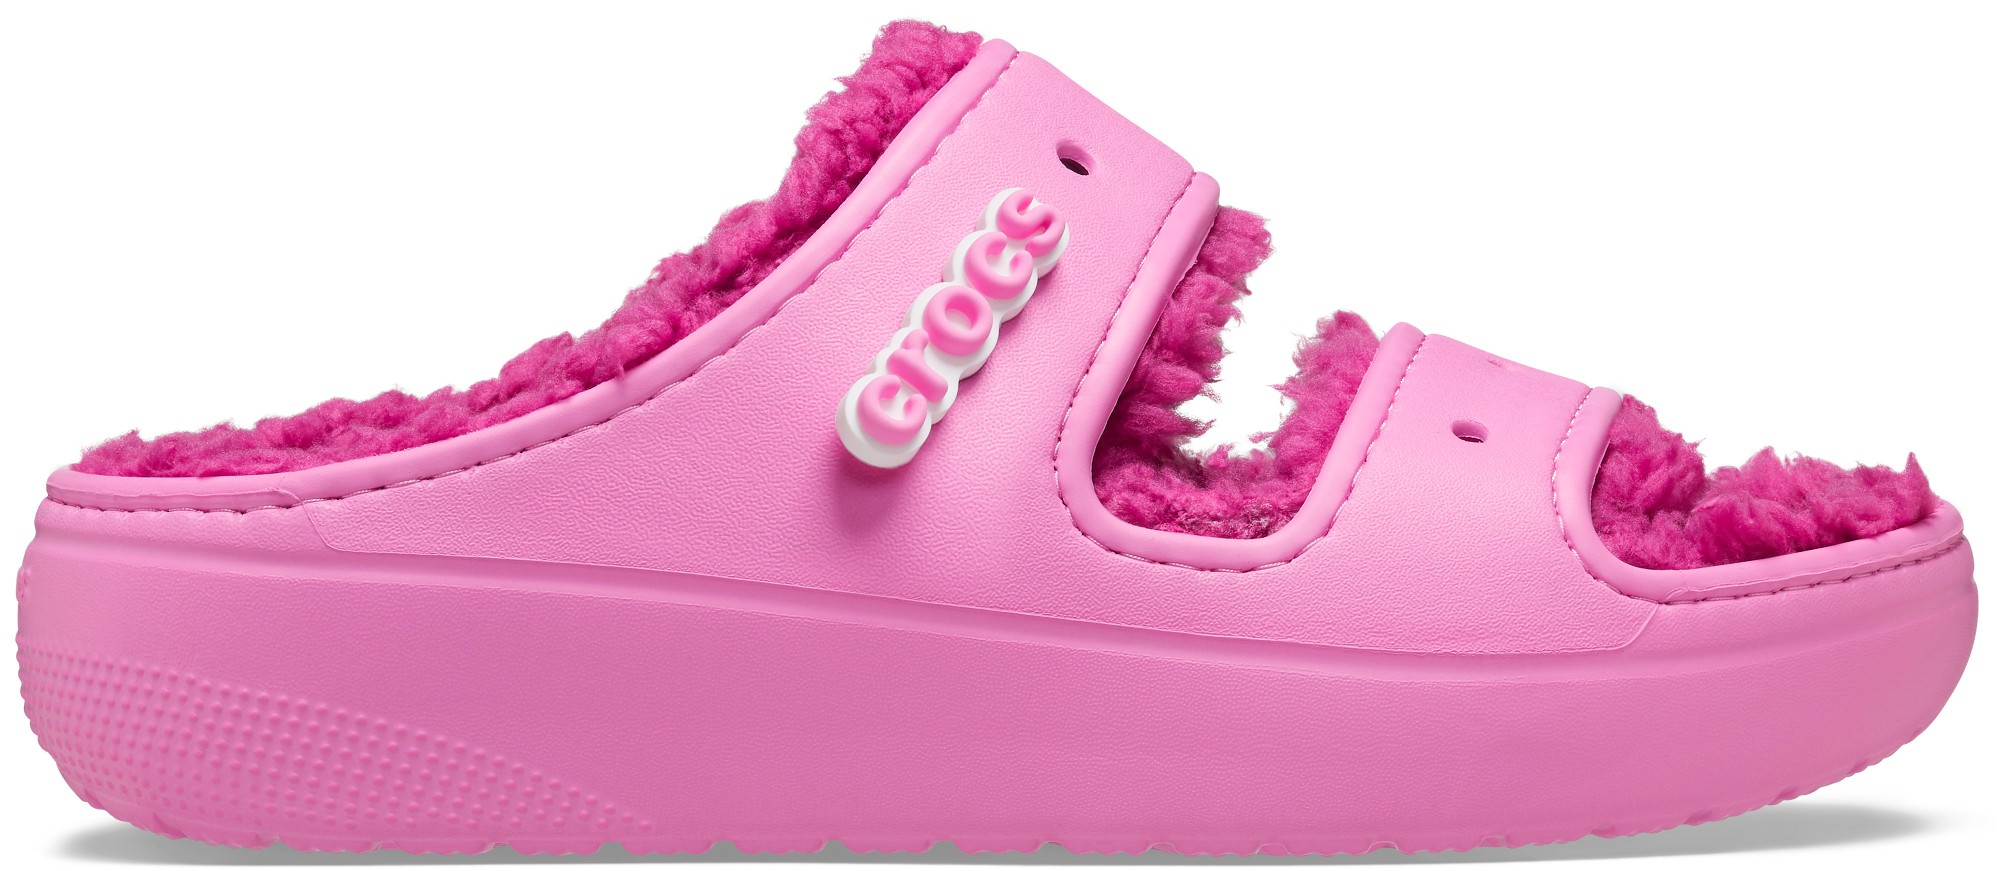 Crocs™ Classic Cozzzy Sandal Taffy Pink 41